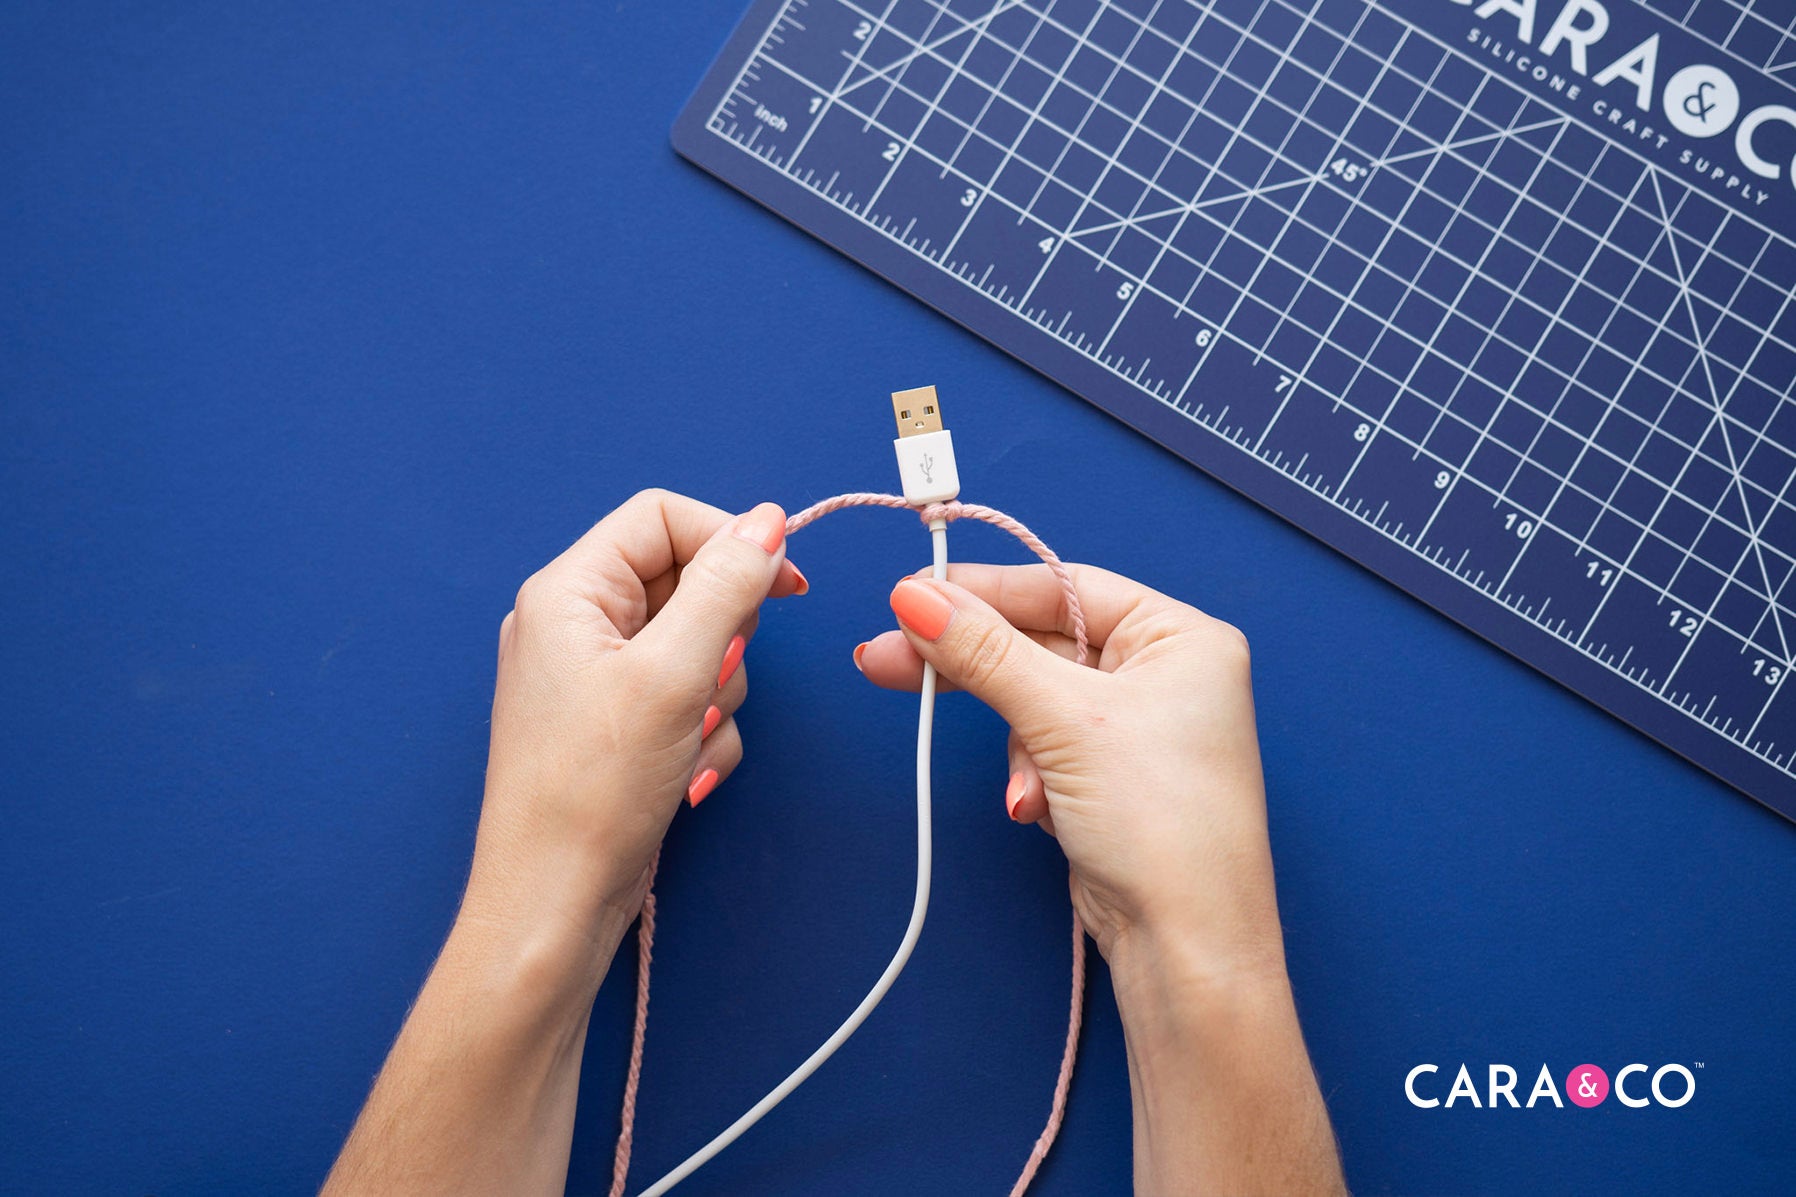 DIY Macrame phone charger cord - Cara & Co